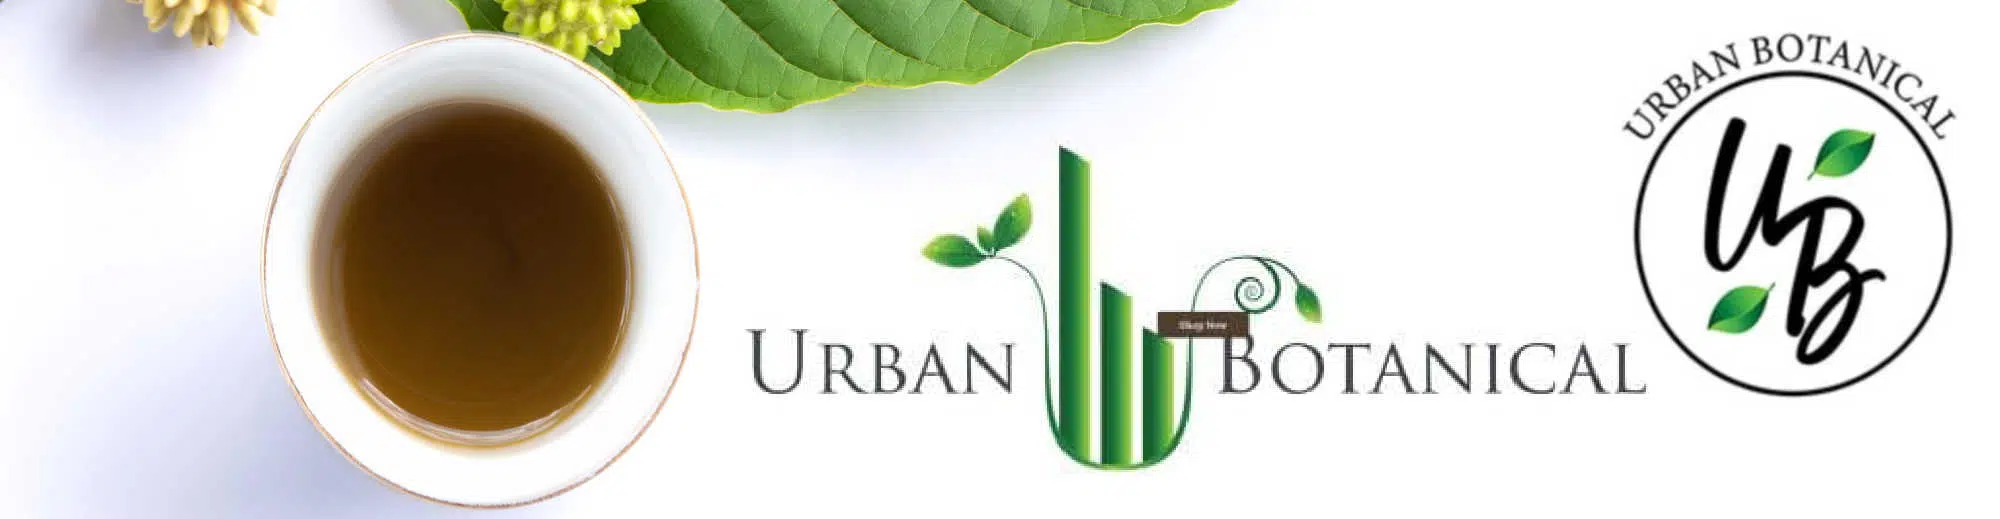 image of urban botanicals